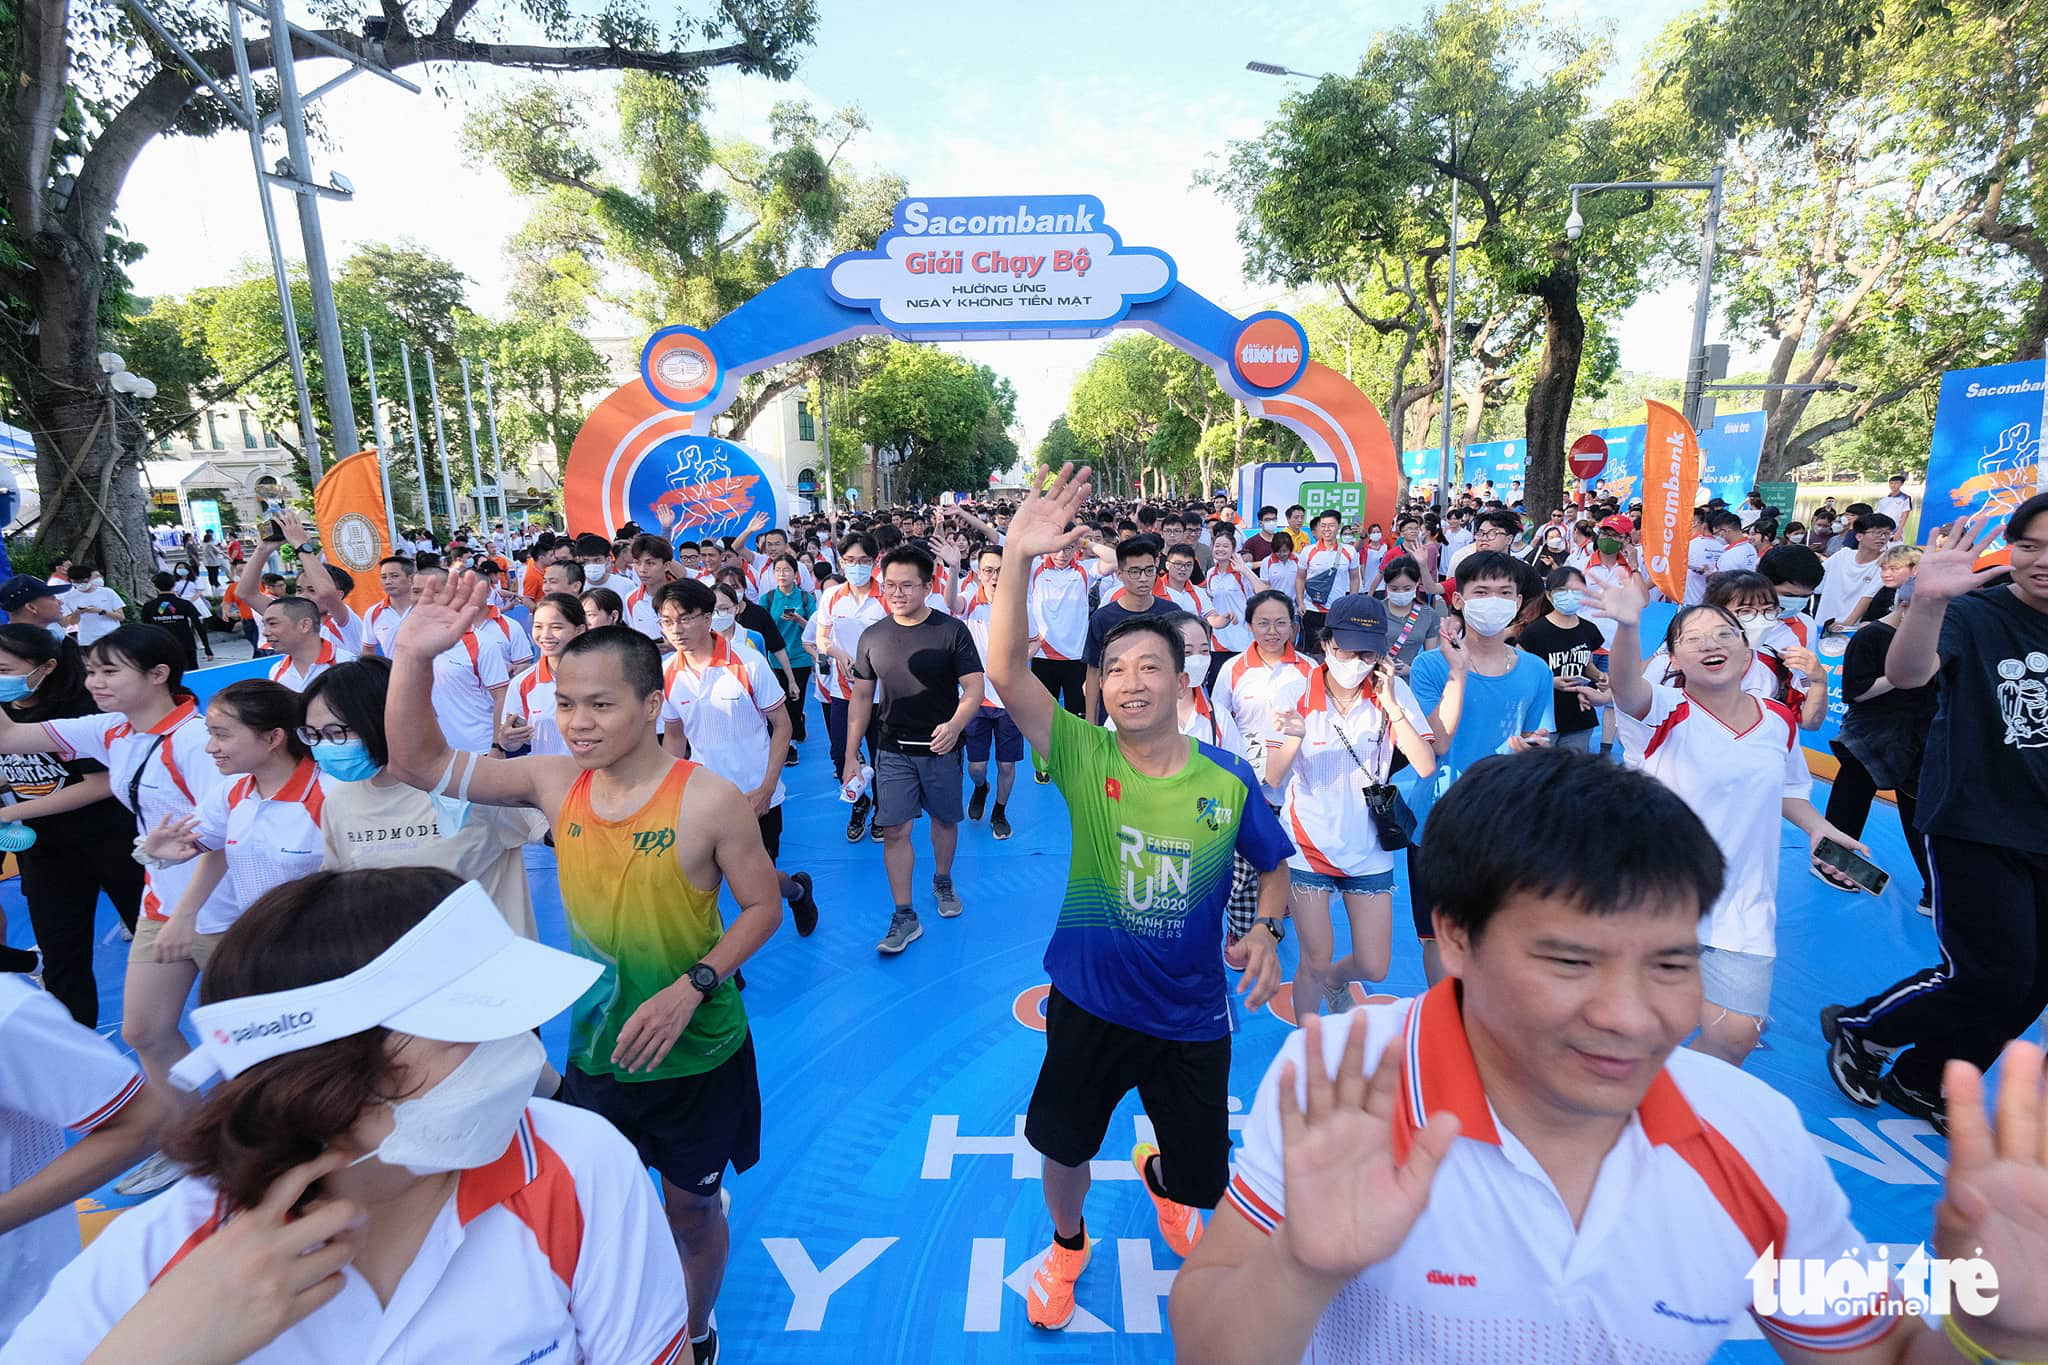 2,000 take part in run to mark Cashless Day in Hanoi